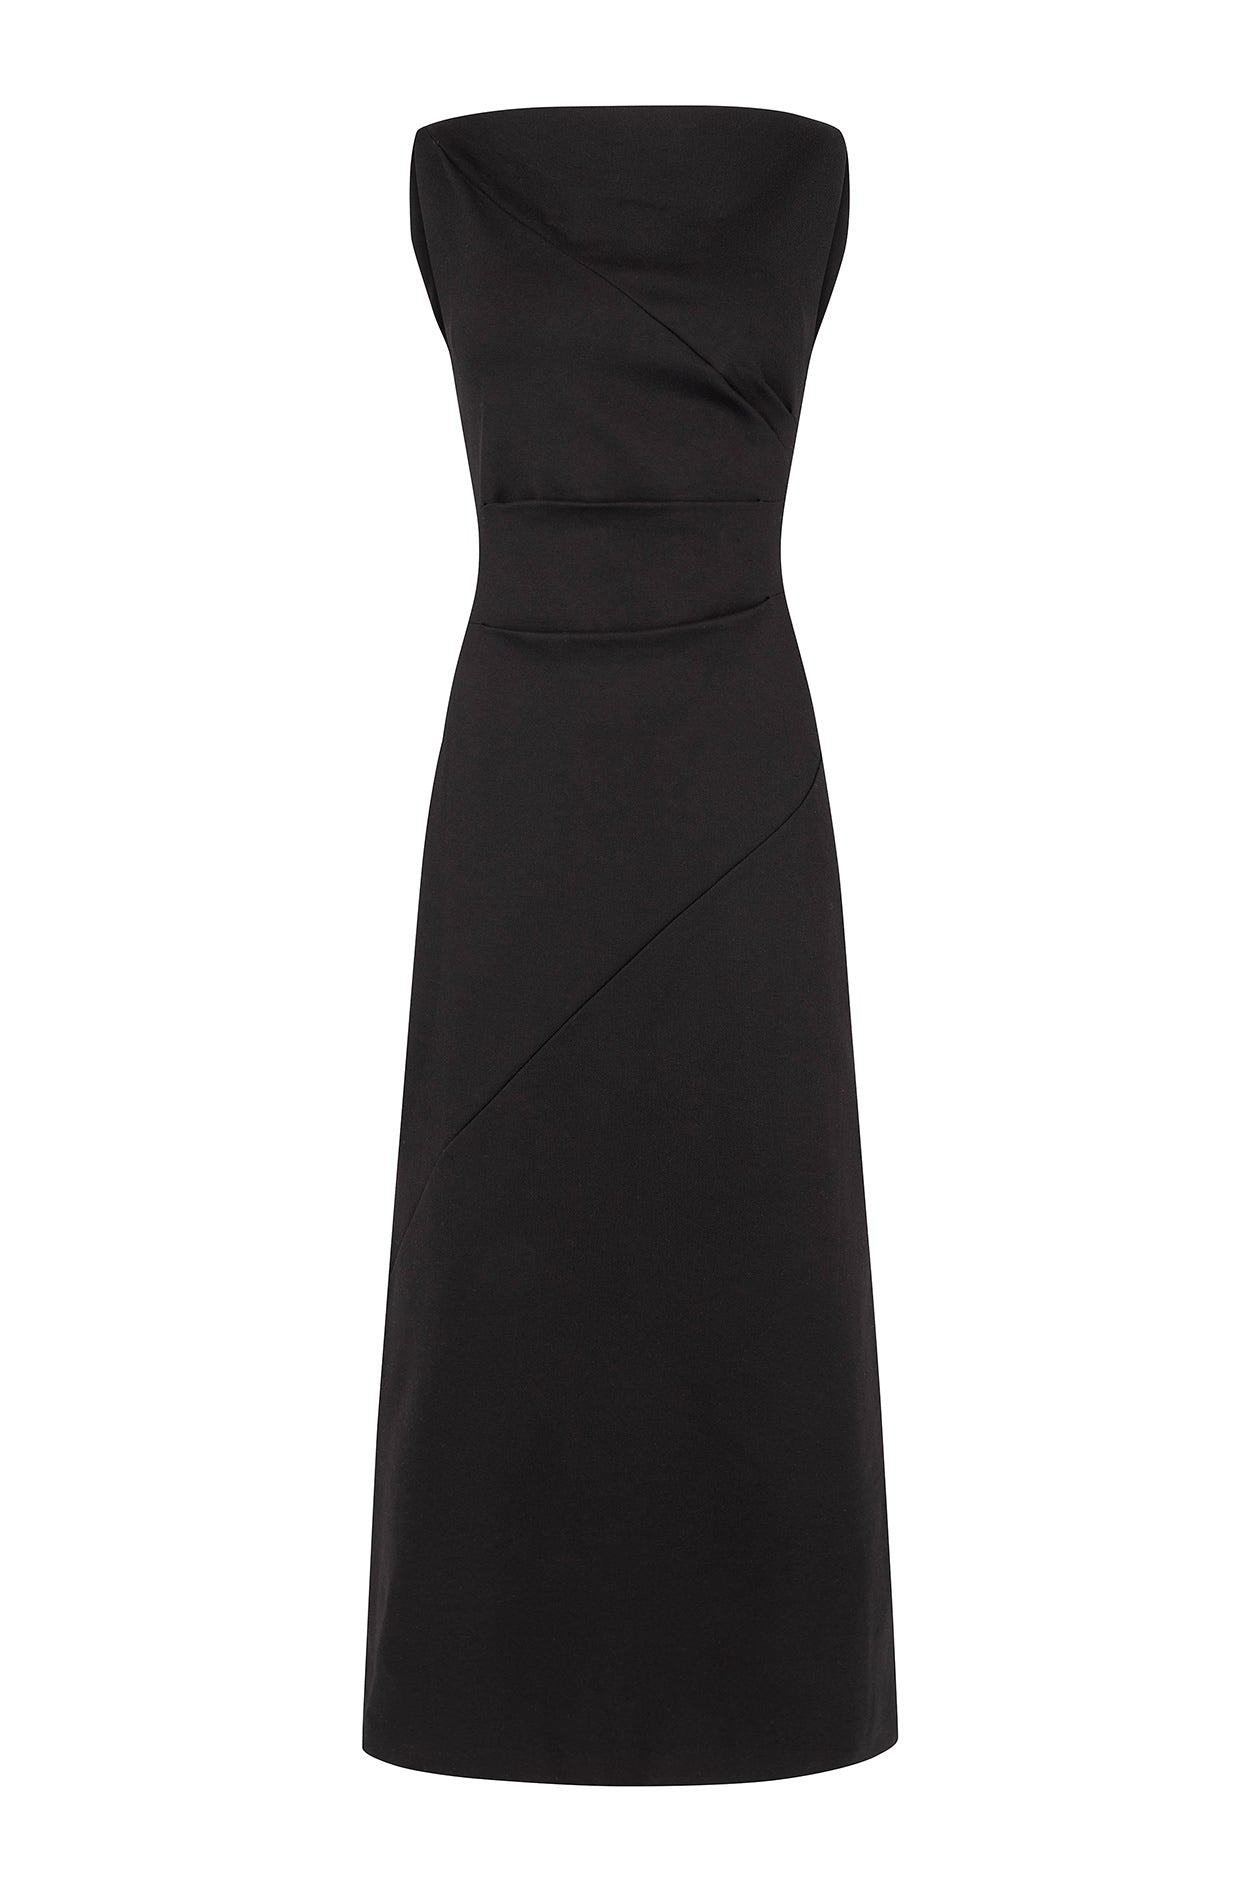 PRE-ORDER Matilda Dress Black